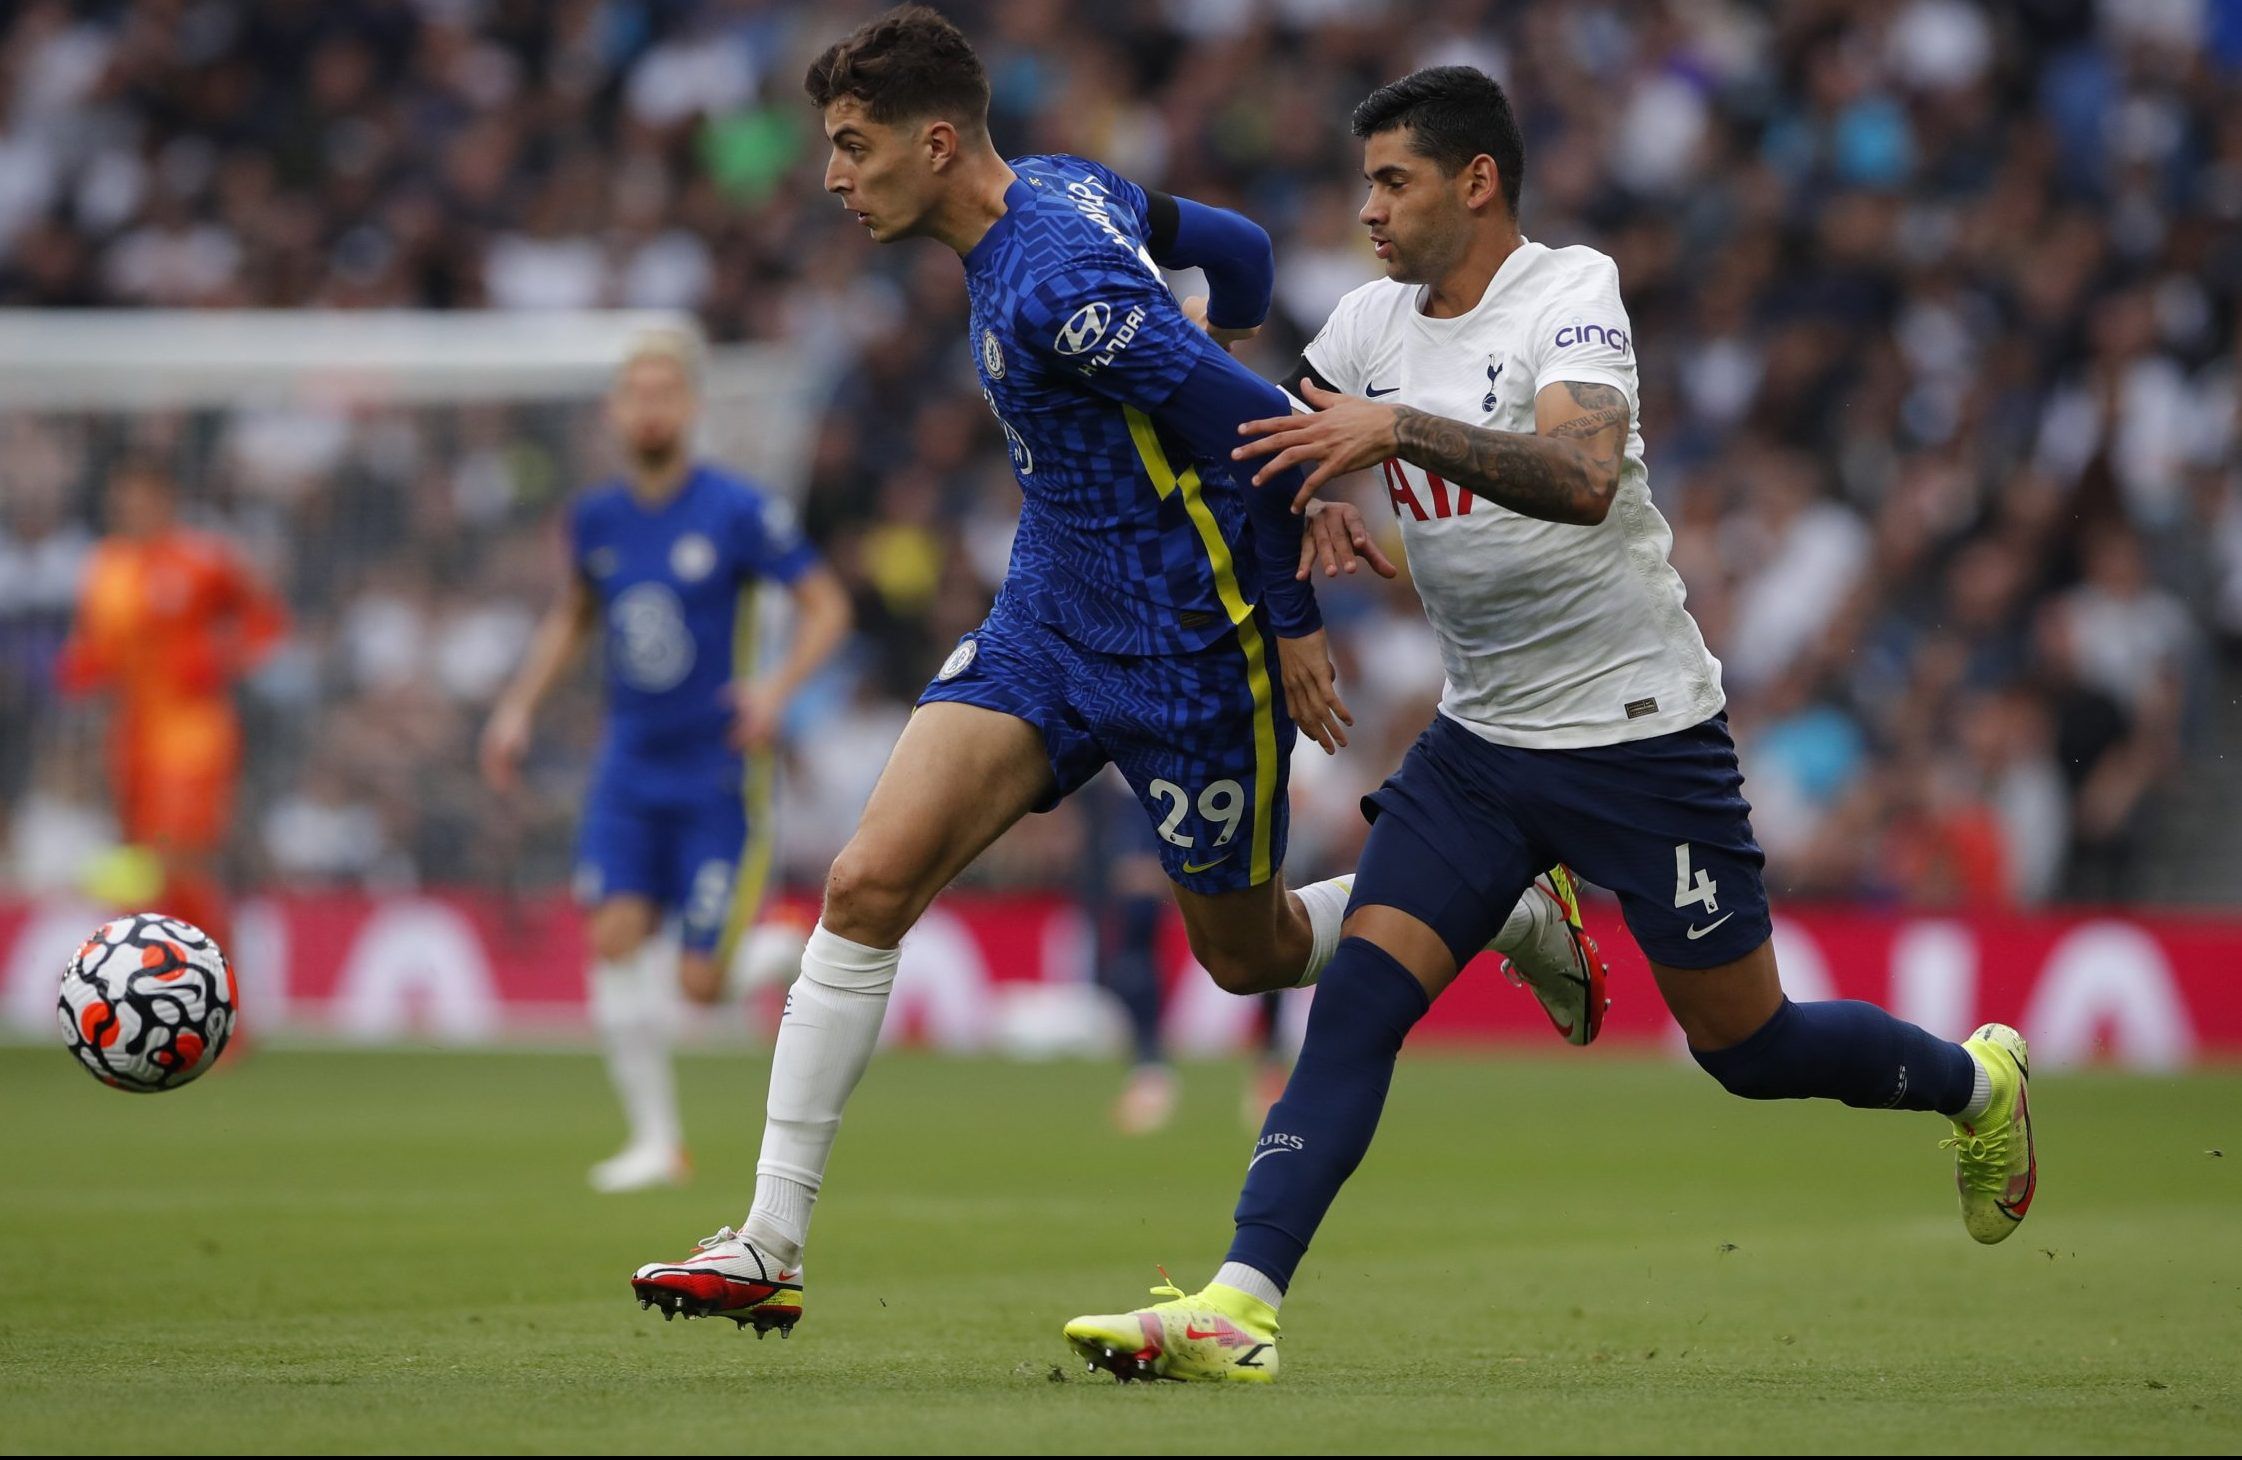 Spurs defender Cristian Romero in action against Chelsea's Kai Havertz in the Premier League